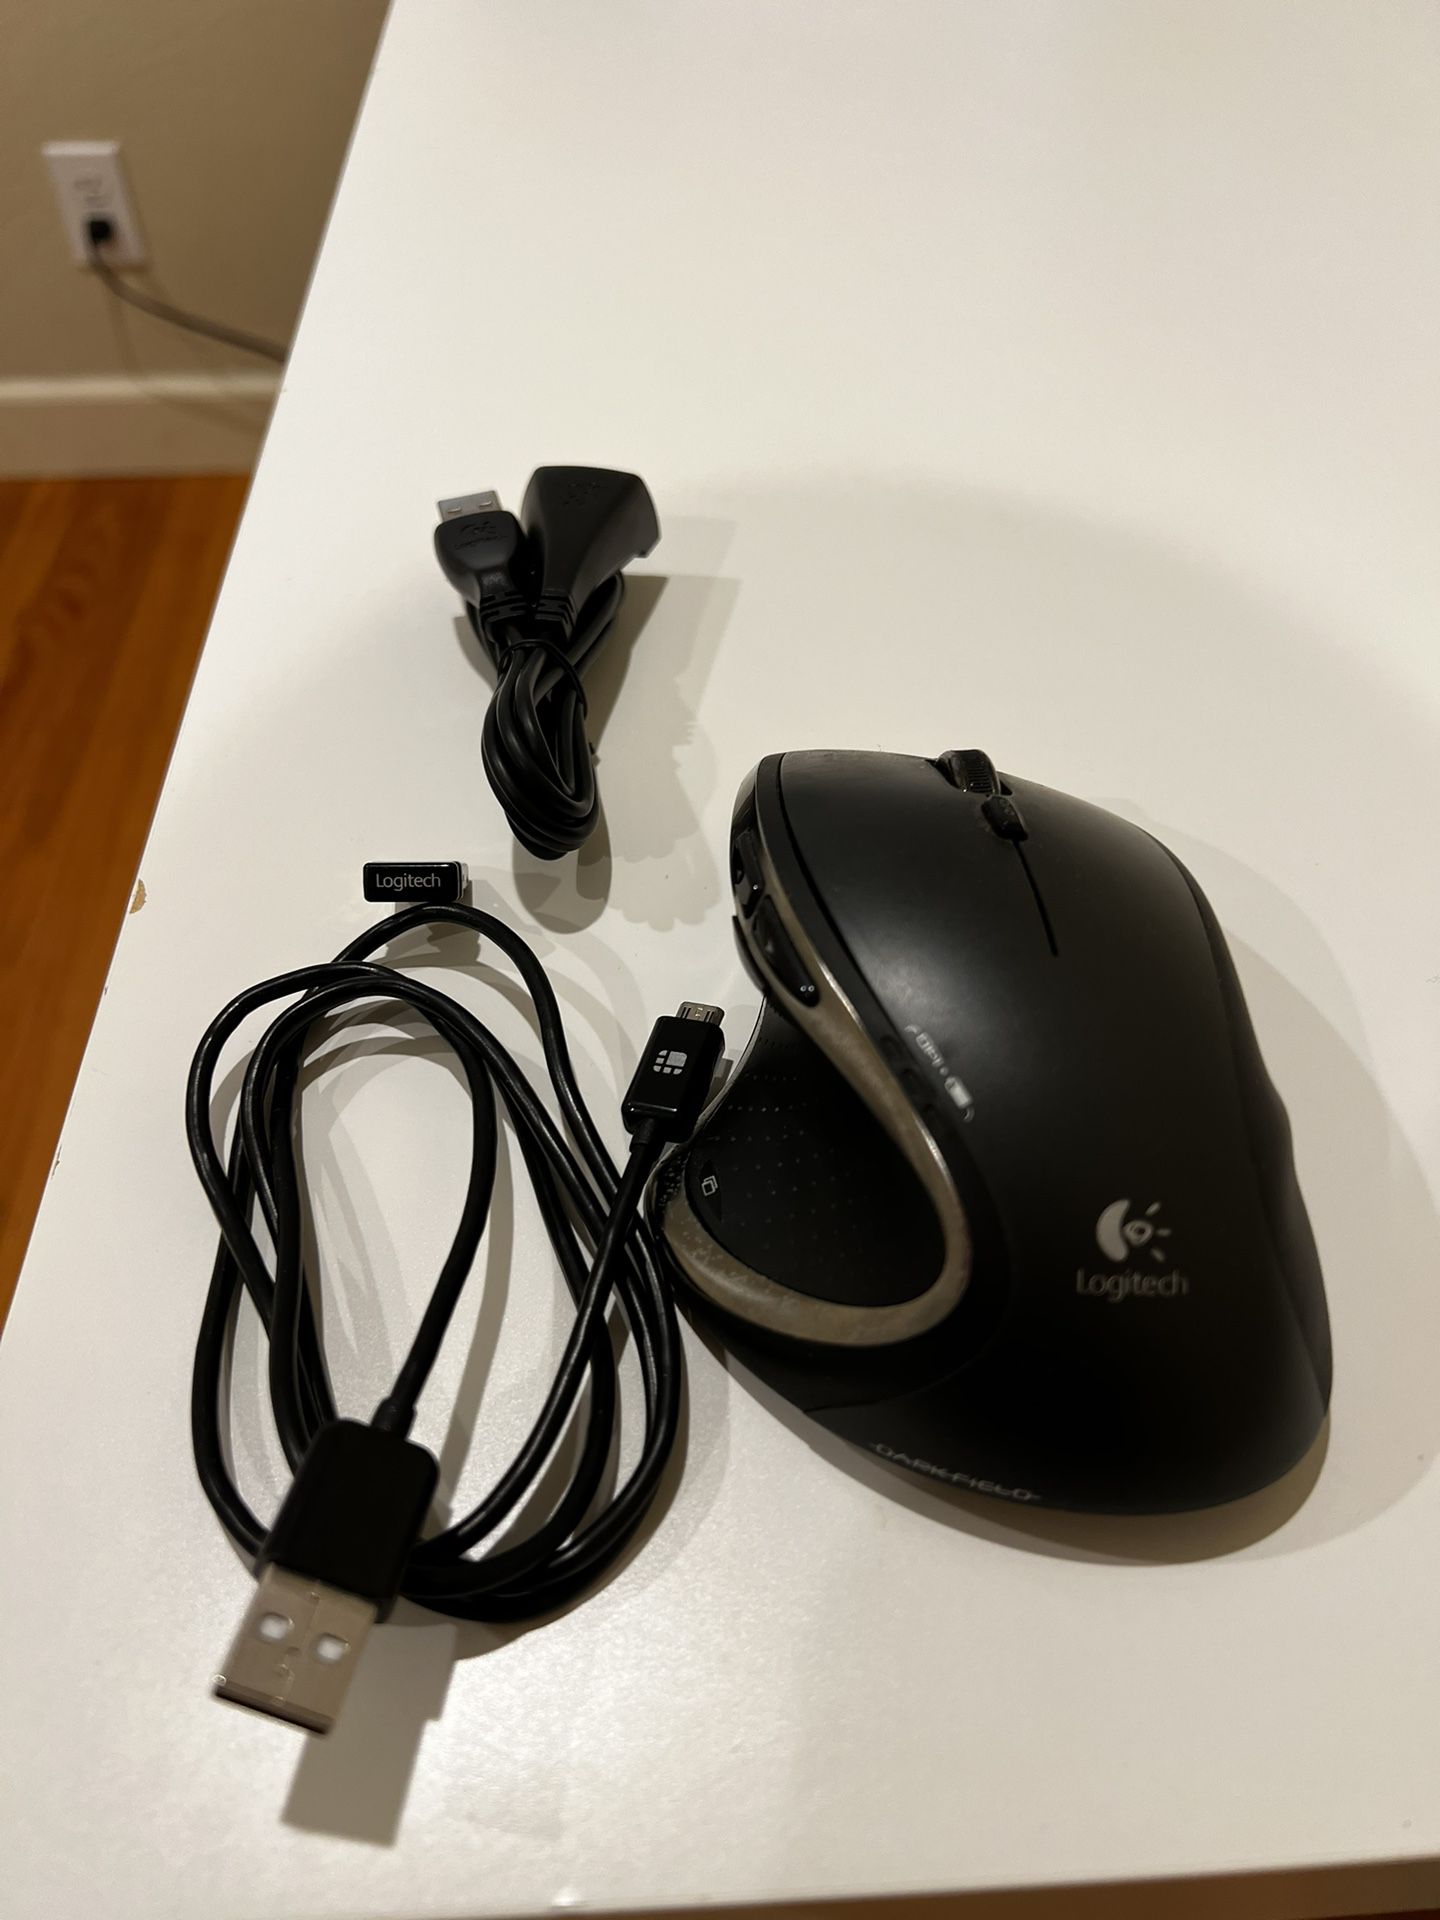 Logitech MX Bluetooth Wireless Mouse